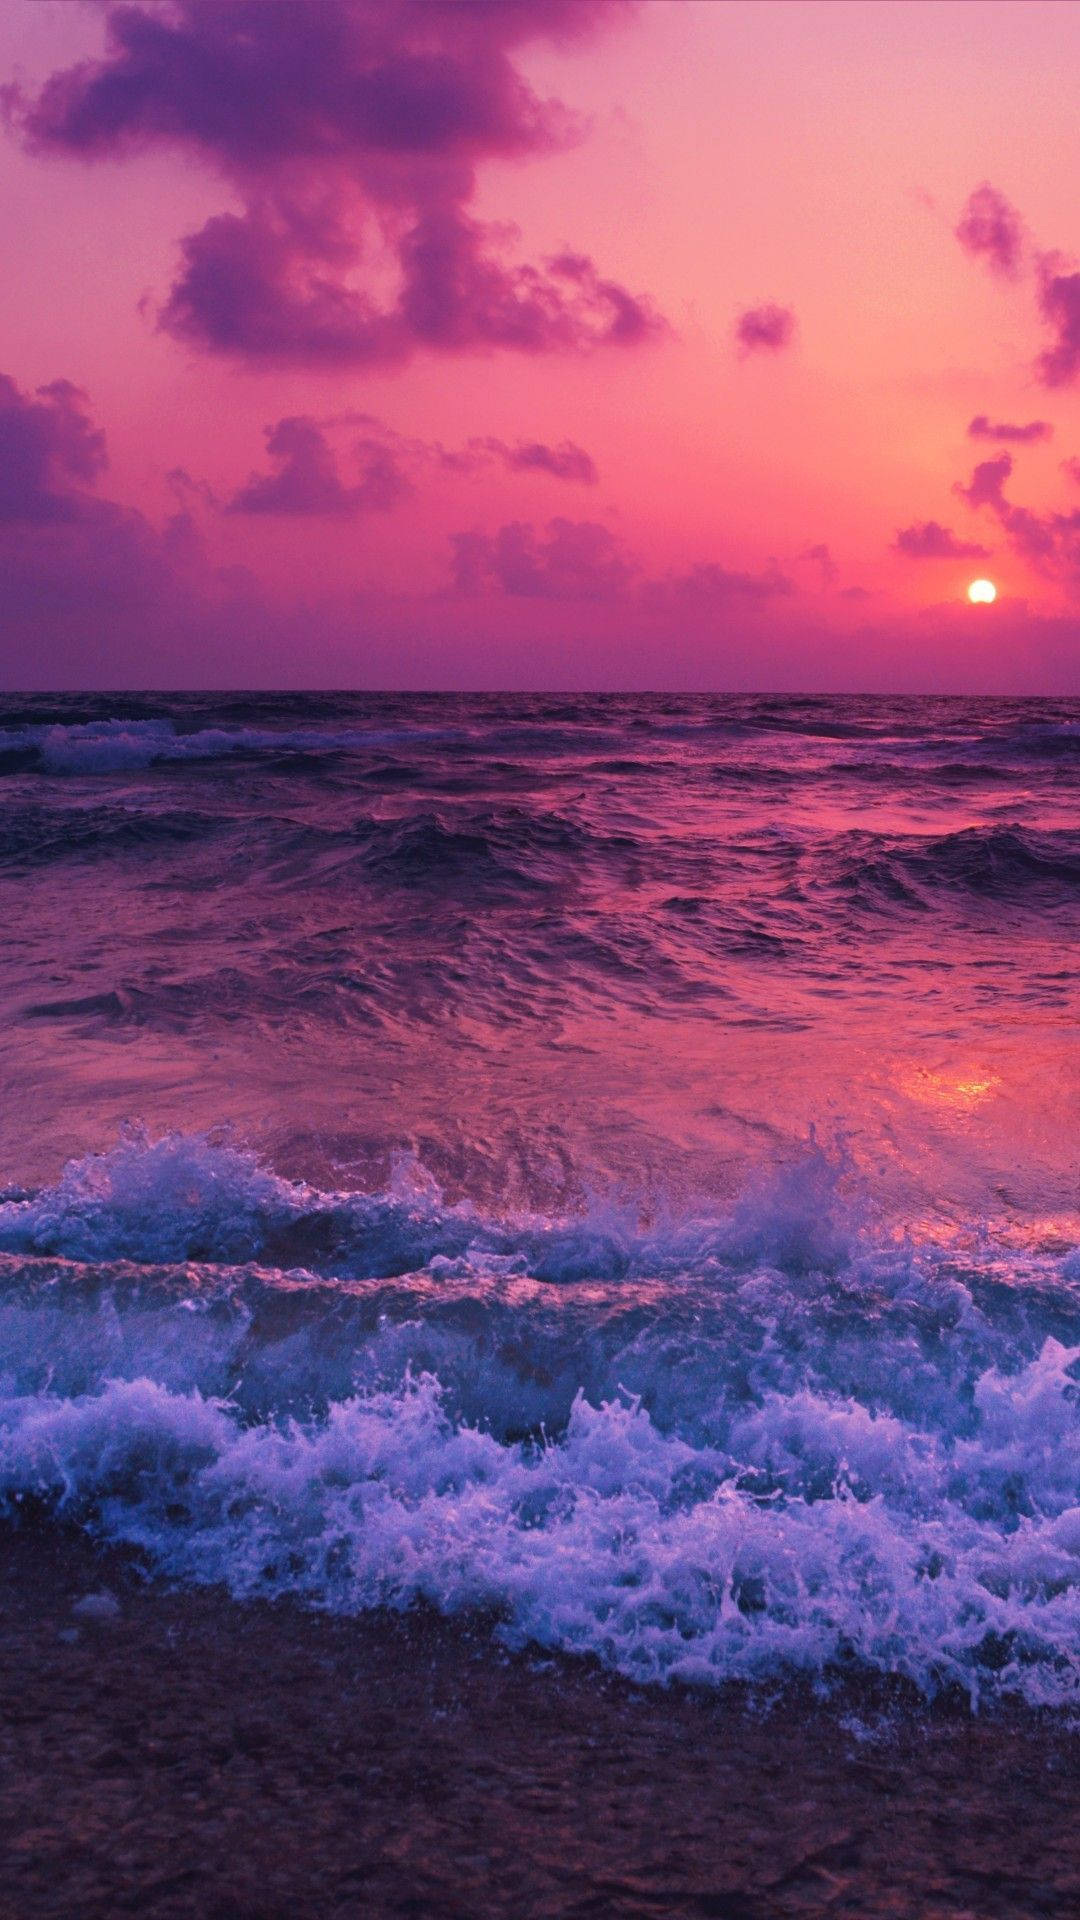 Raging Ocean Waves Over Aesthetic Sunset Background